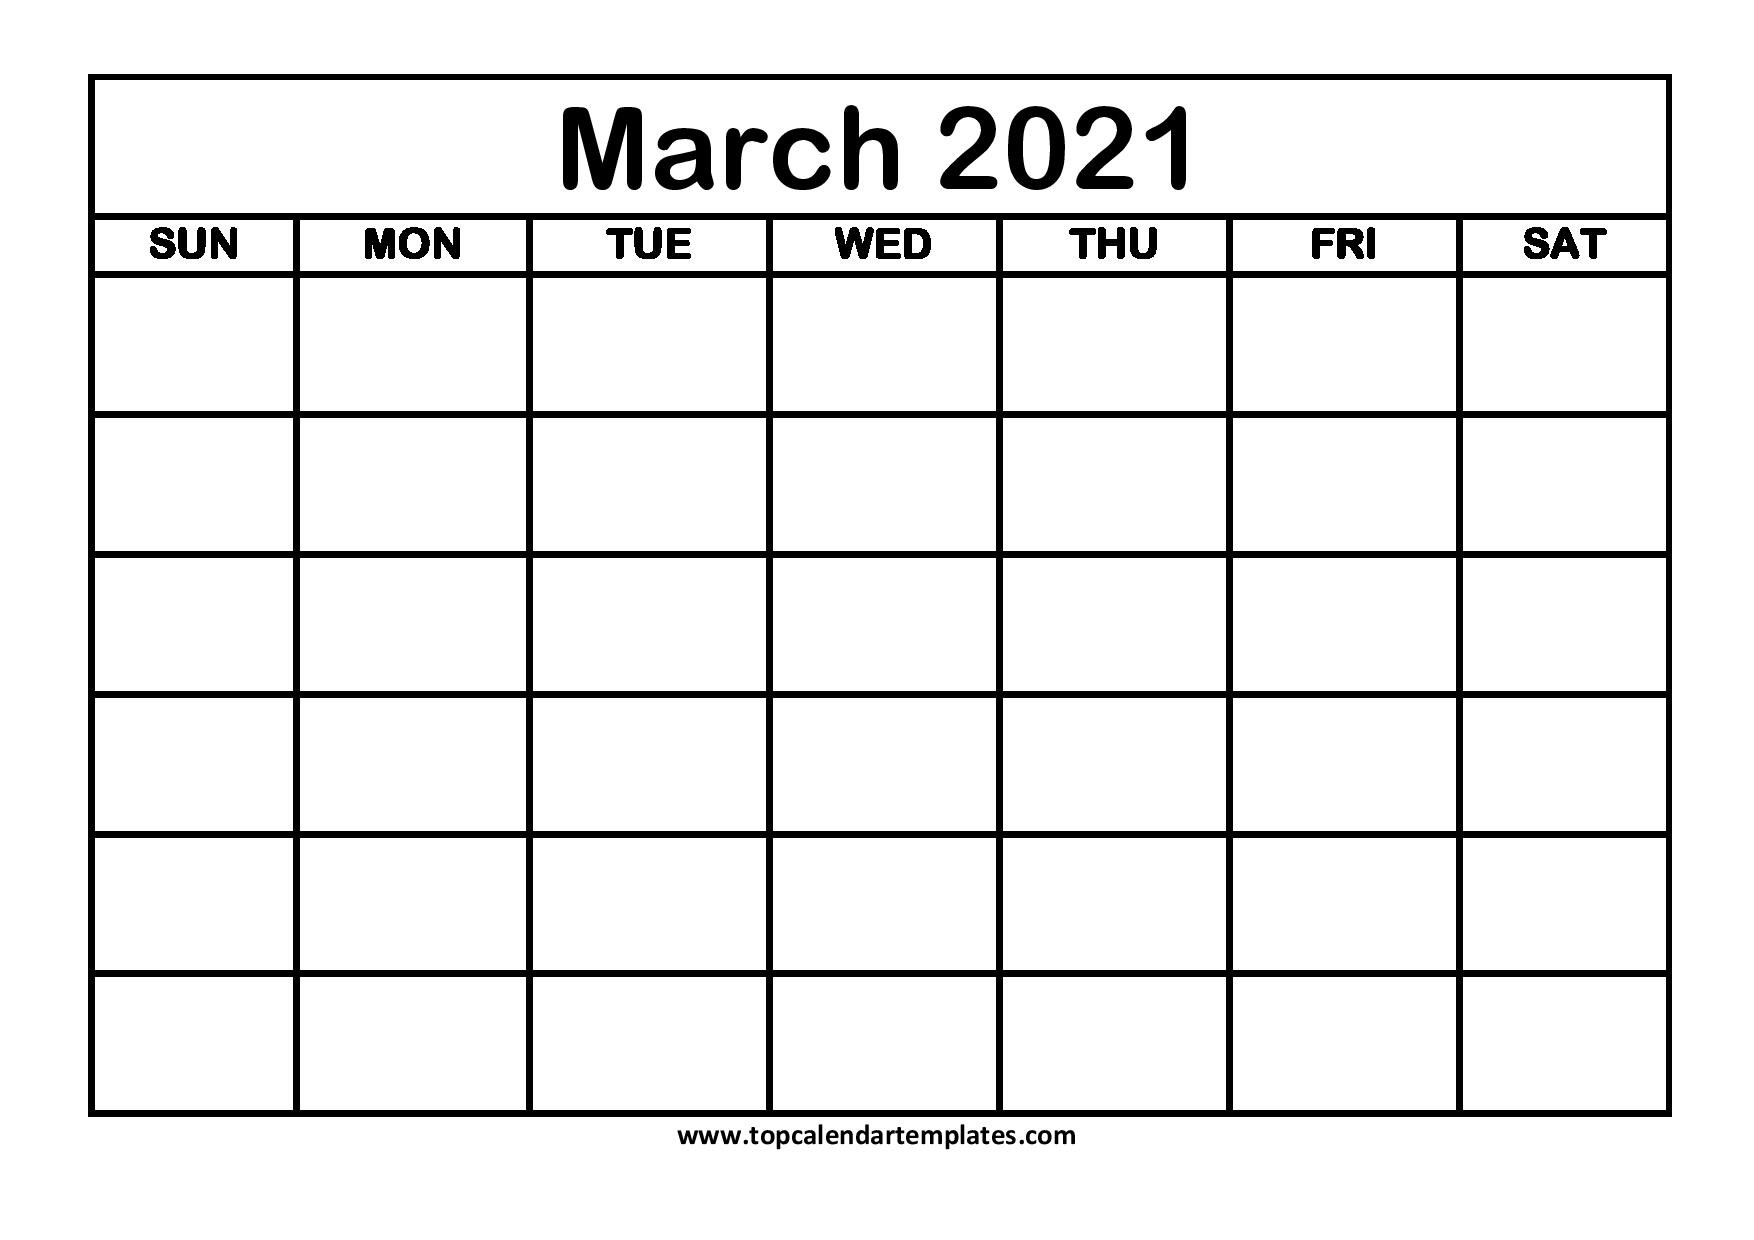 Free March 2021 Printable Calendar in Editable Format